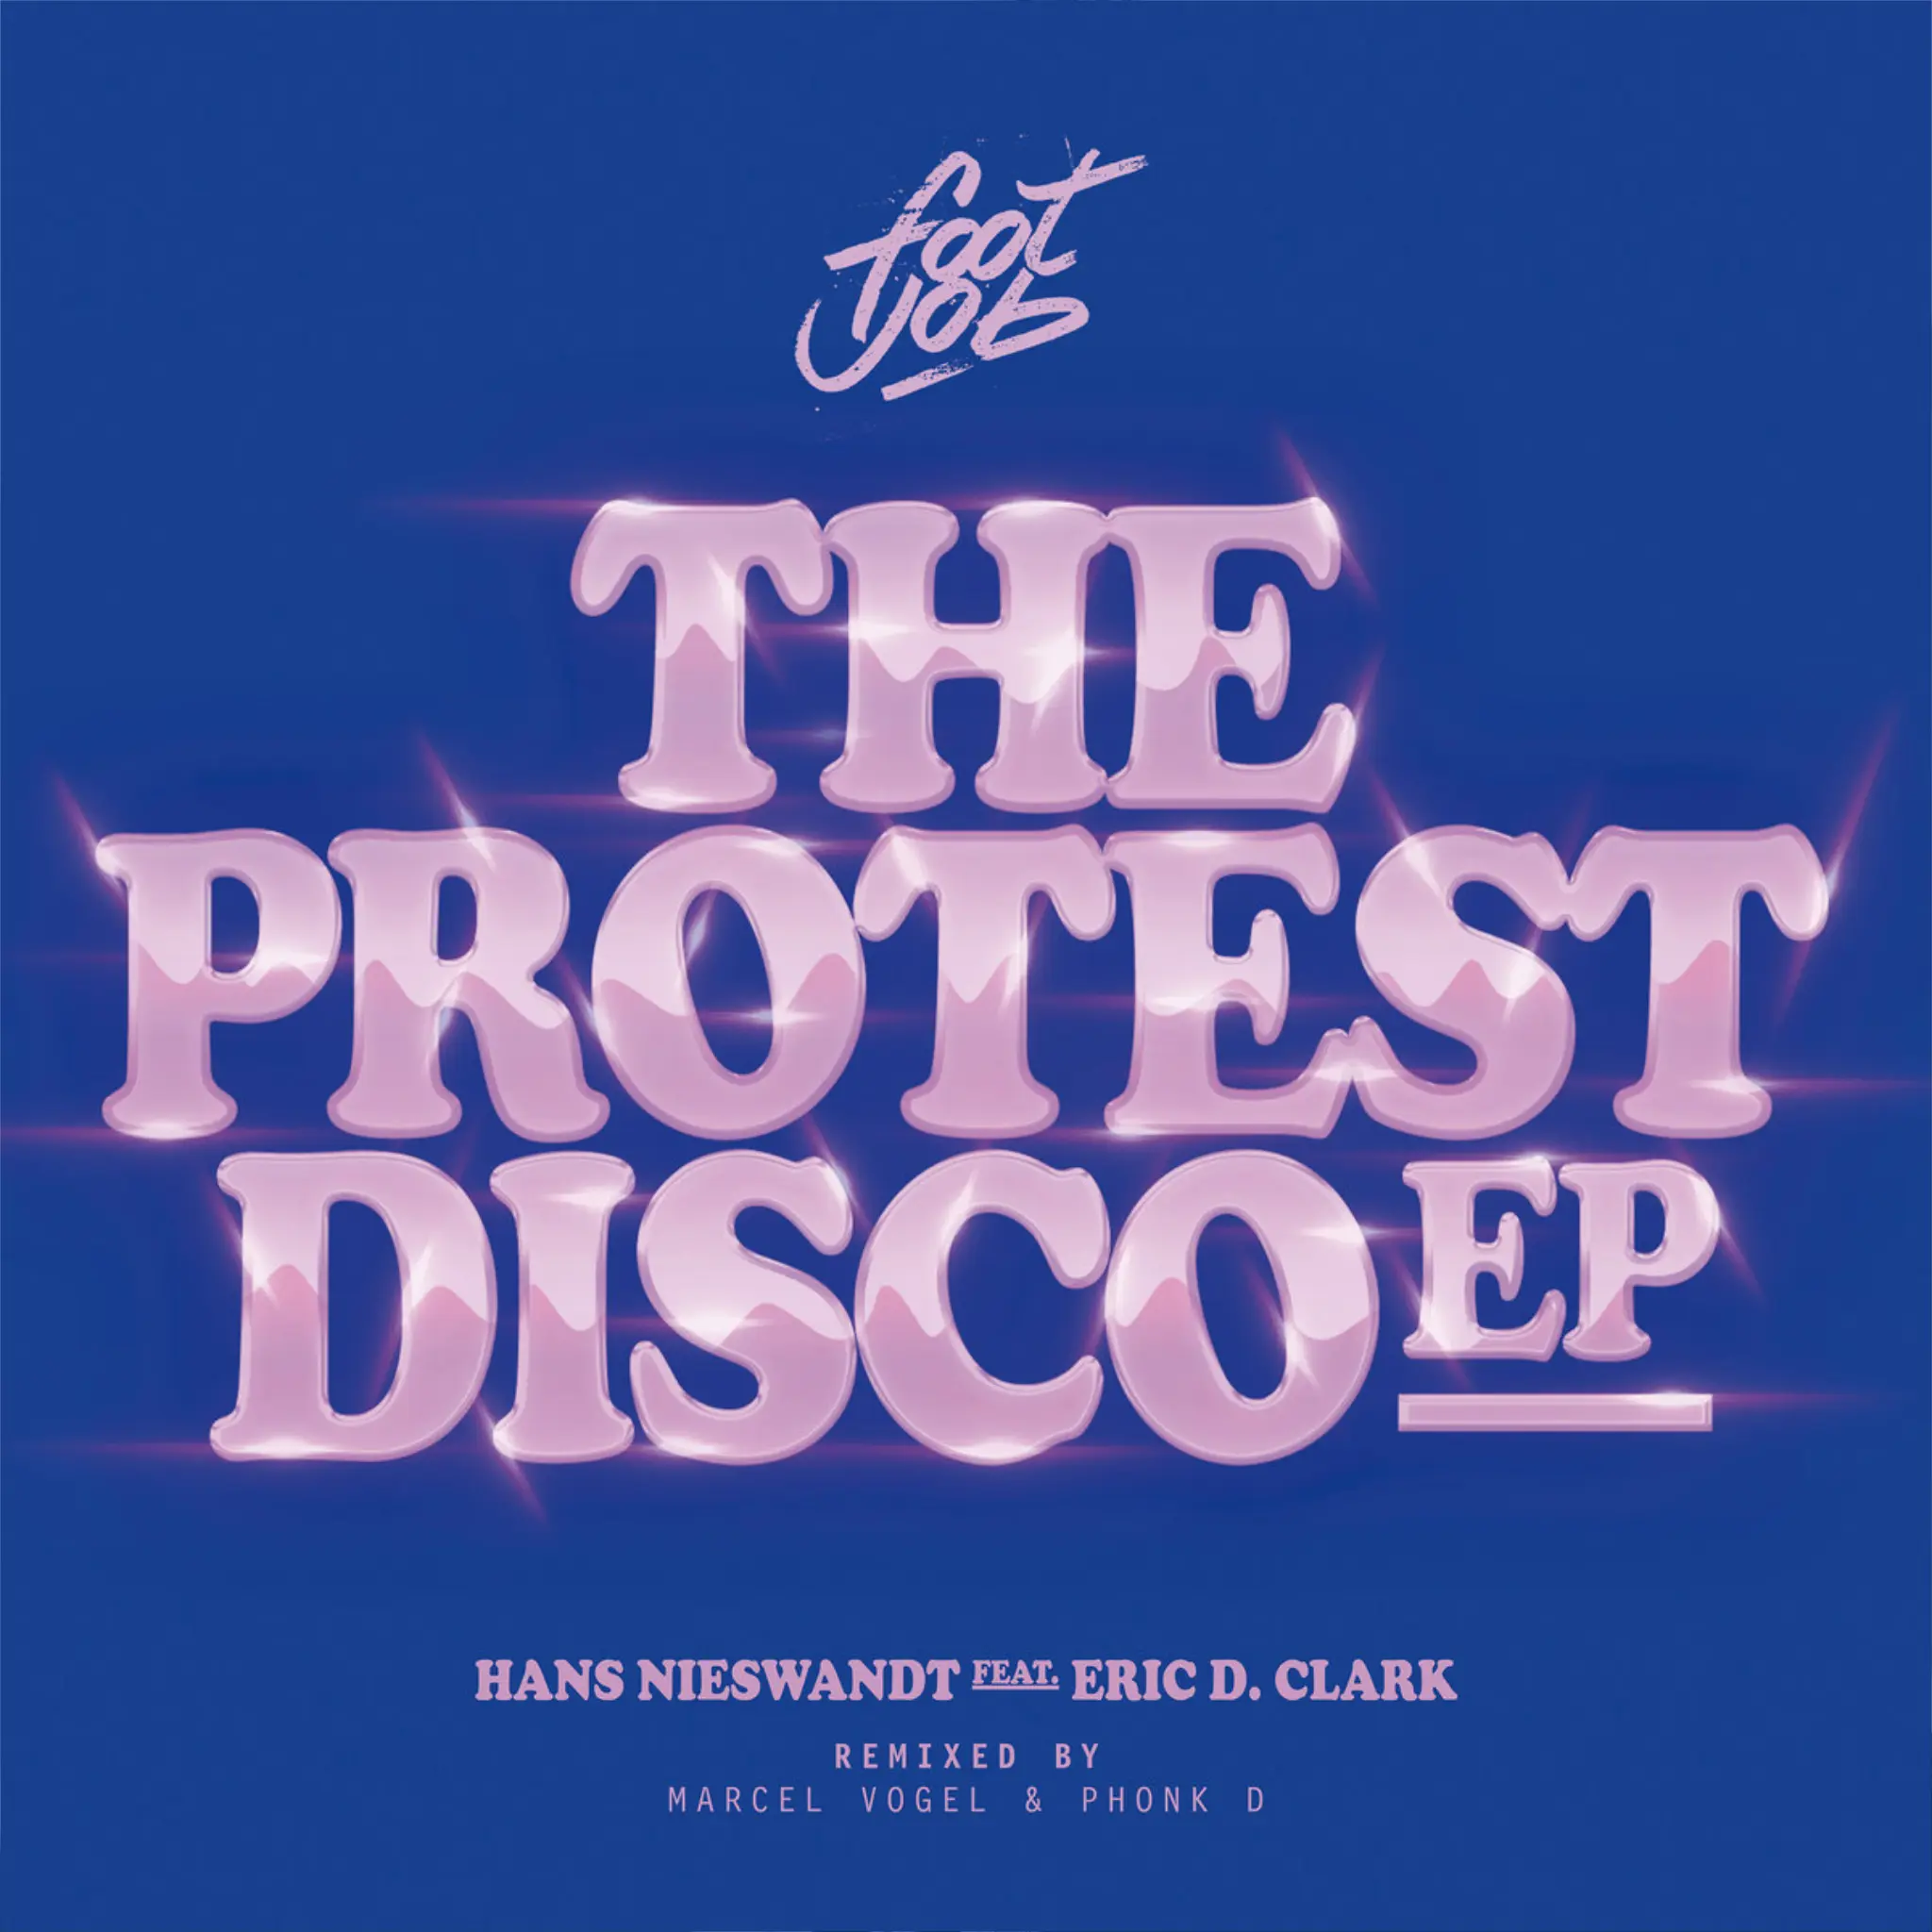 Hans Nieswandt feat. Eric D. Clark - The Protest Disco EP